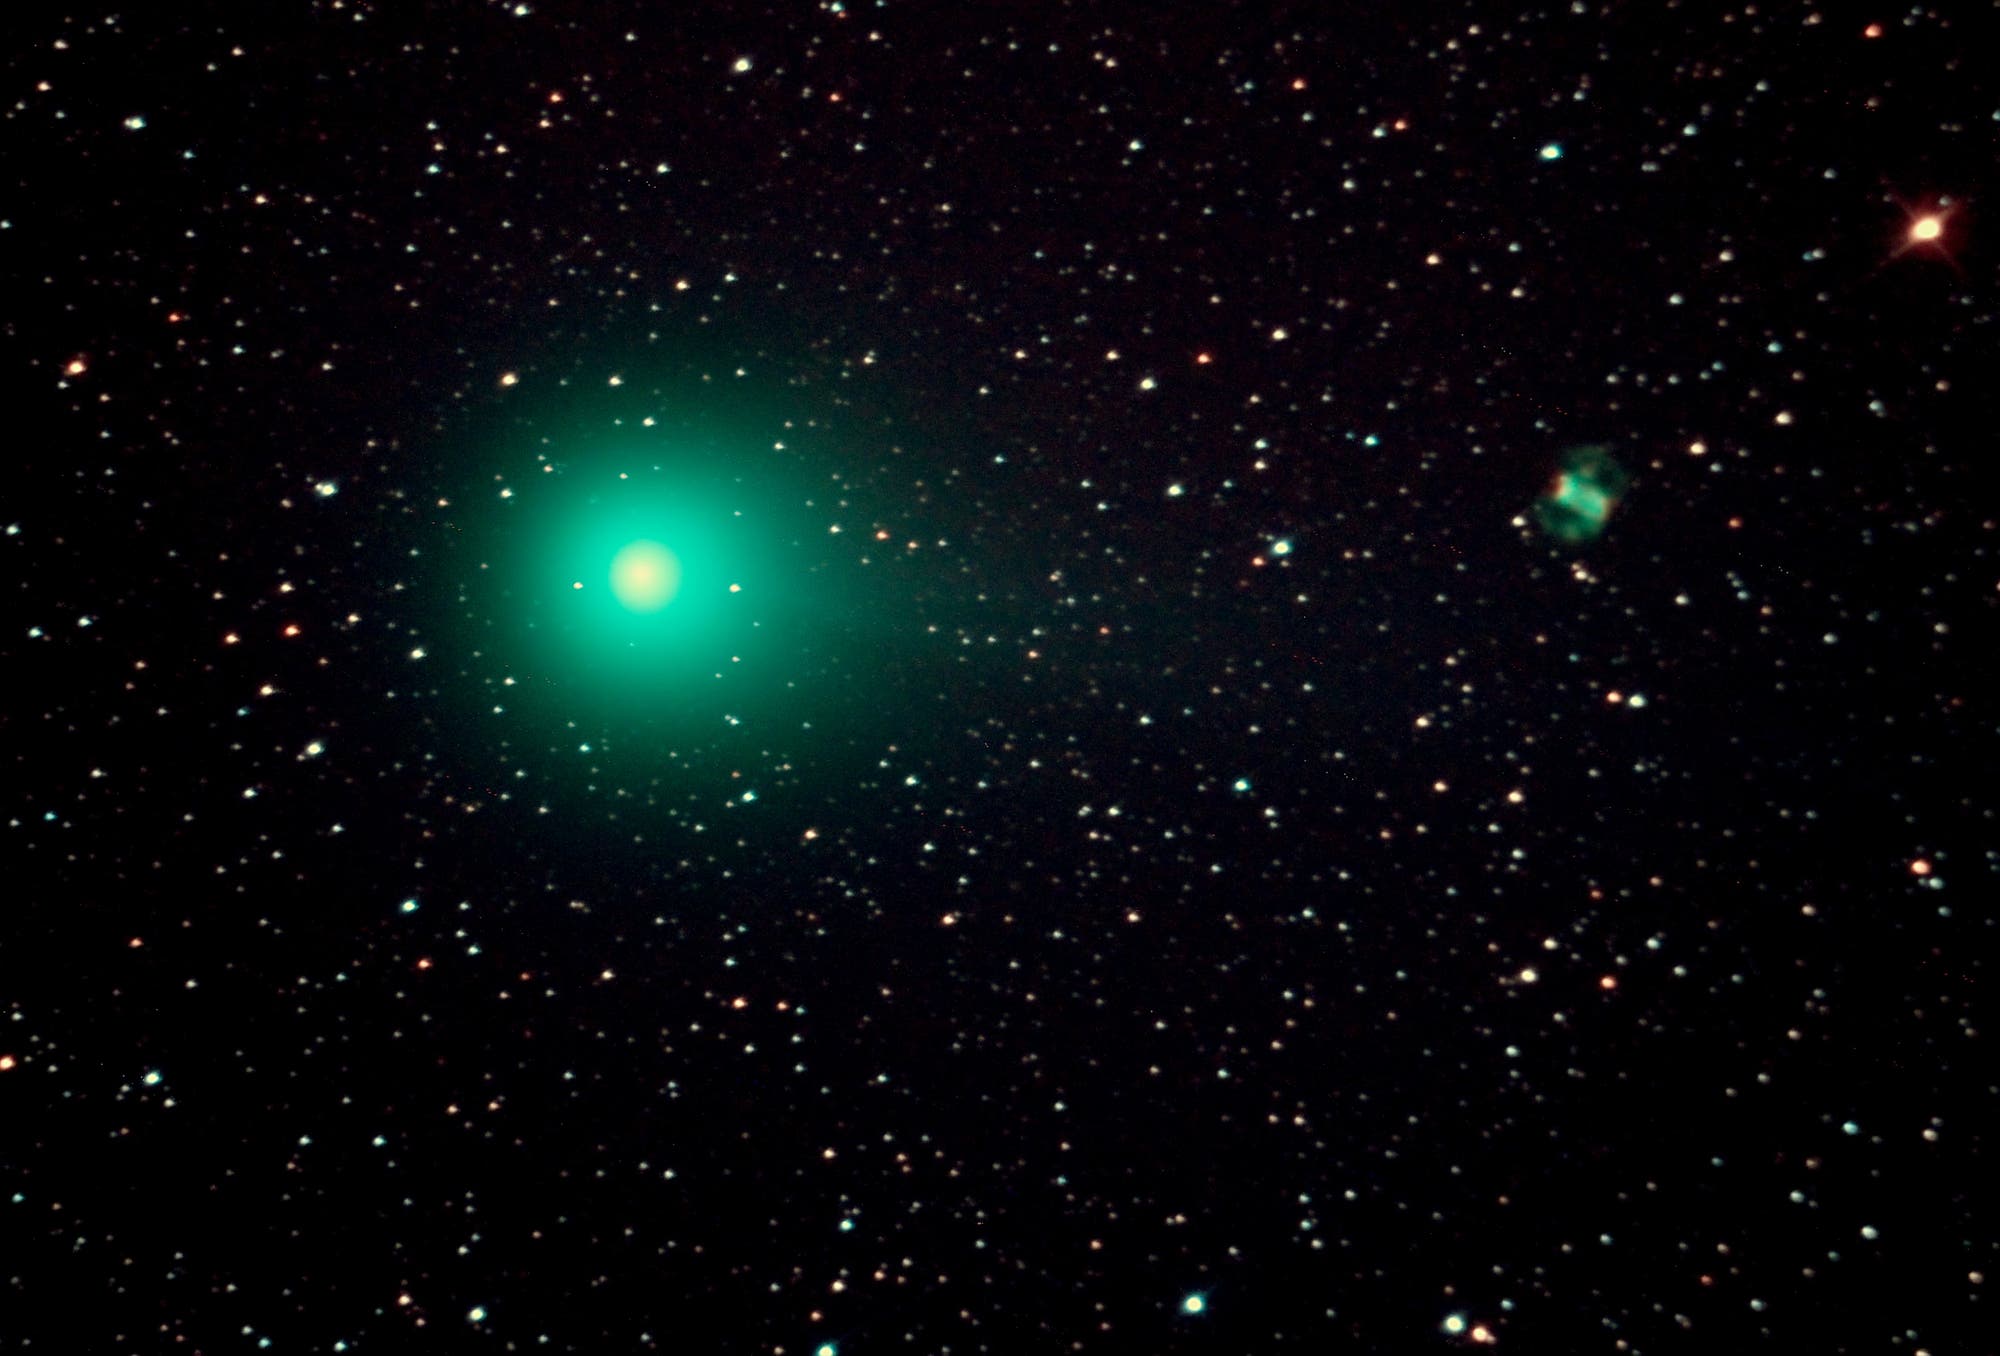 Komet C/2014 Q2 (Lovejoy) bei M76